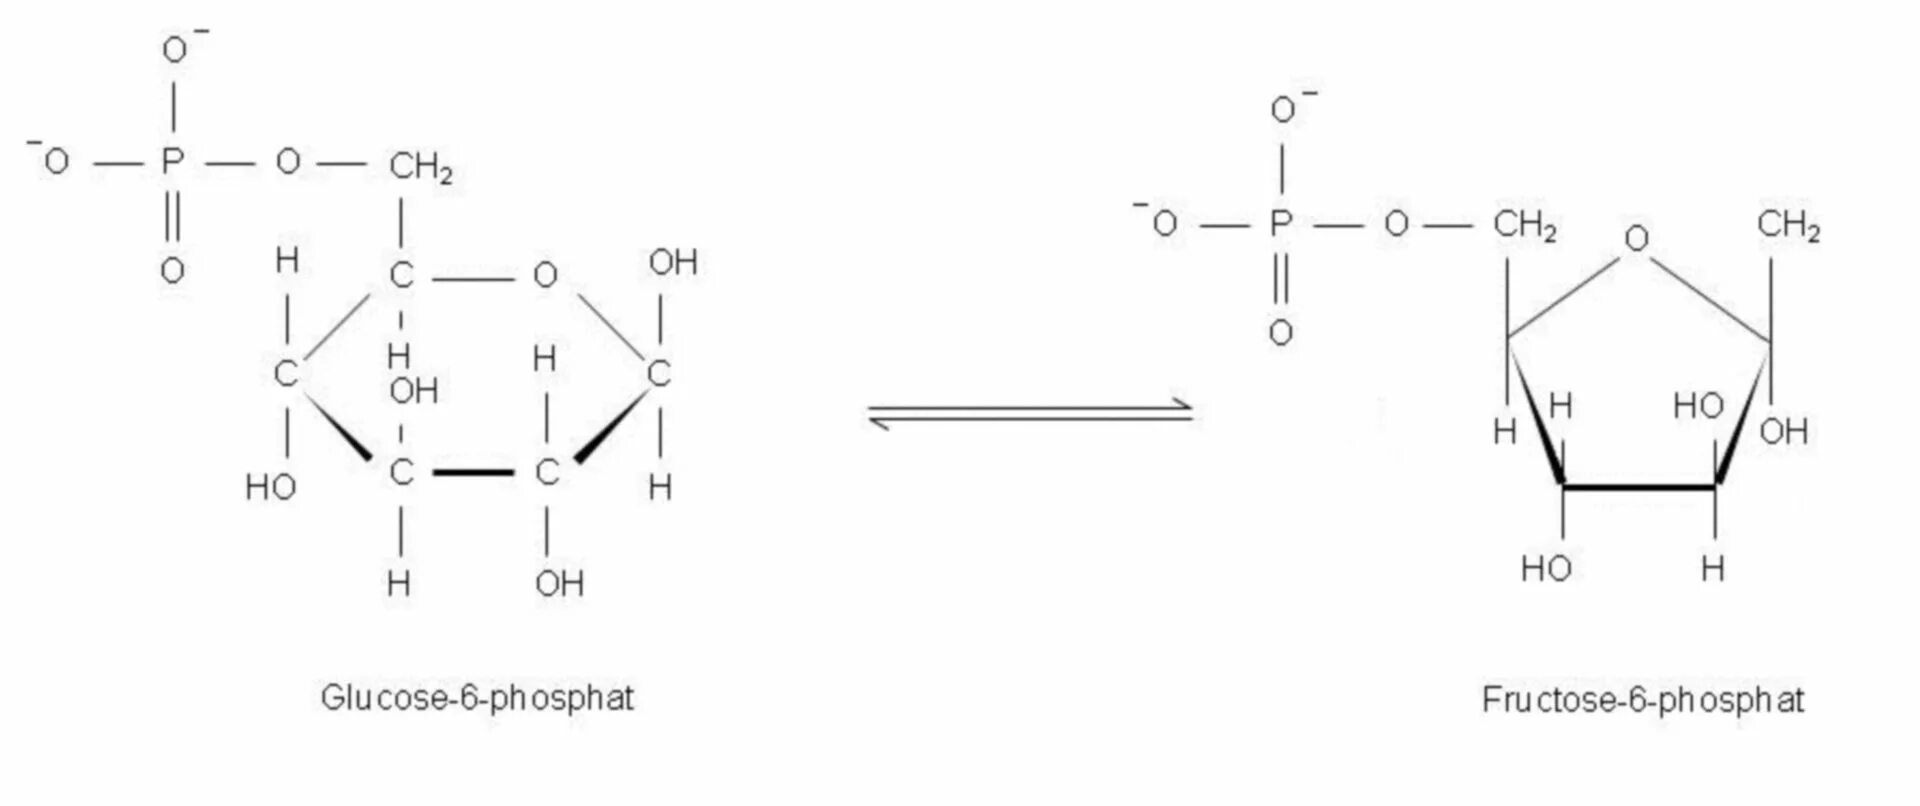 Fructose-6-phosphate. Glucose 6-phosphate to glucose. Fructose-1-phosphate формула. Trixylyl phosphate. Фруктоза селиванова